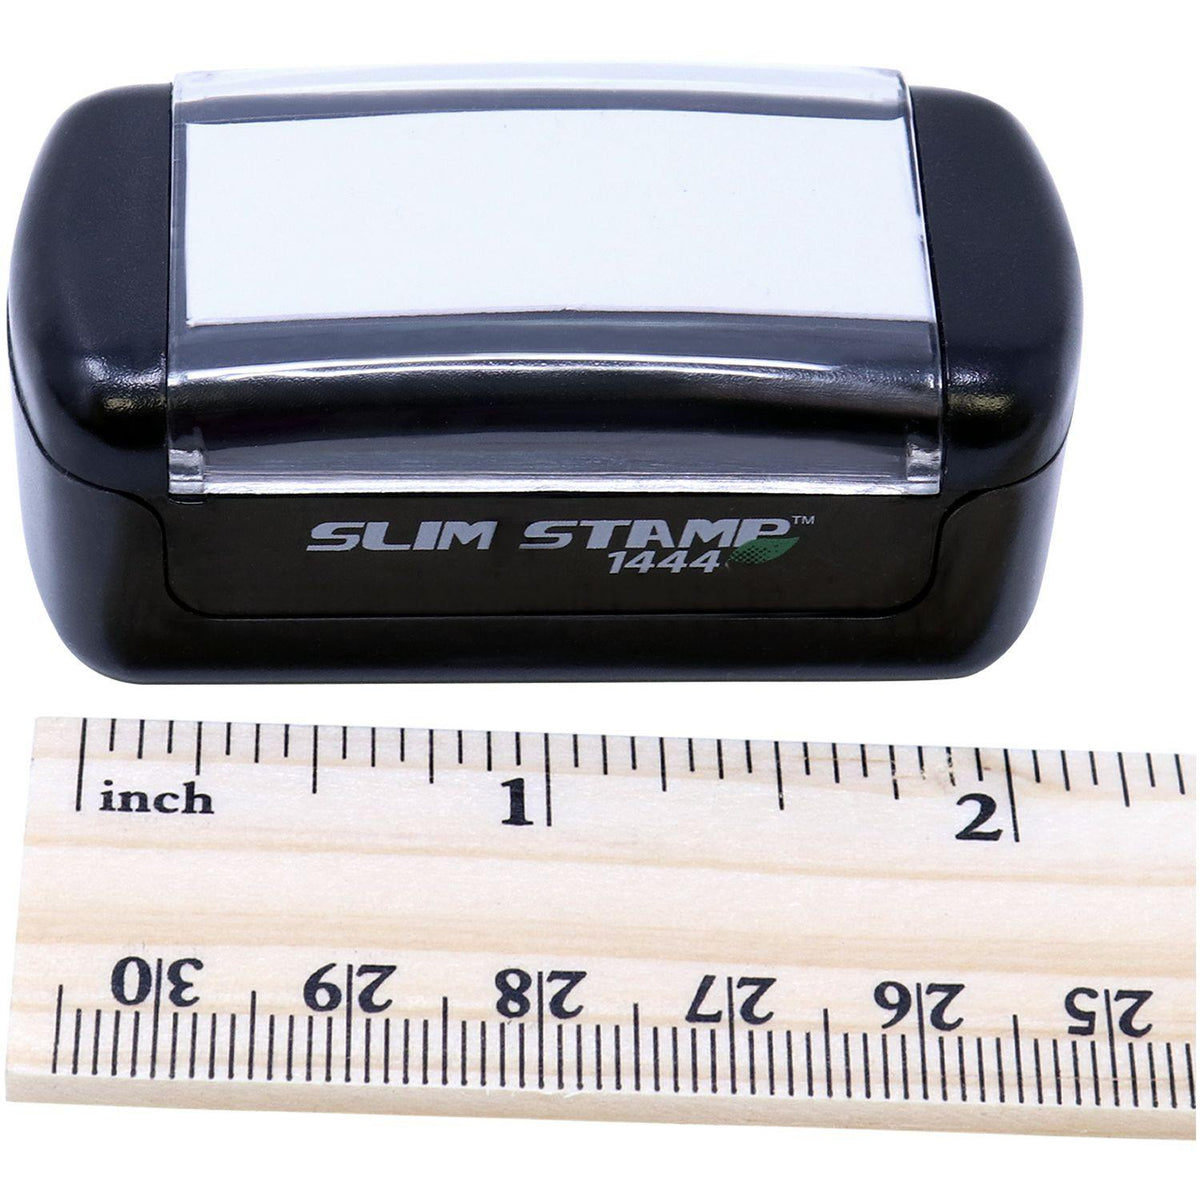 Measurement Slim Pre Inked Petitioner Stamp with Ruler